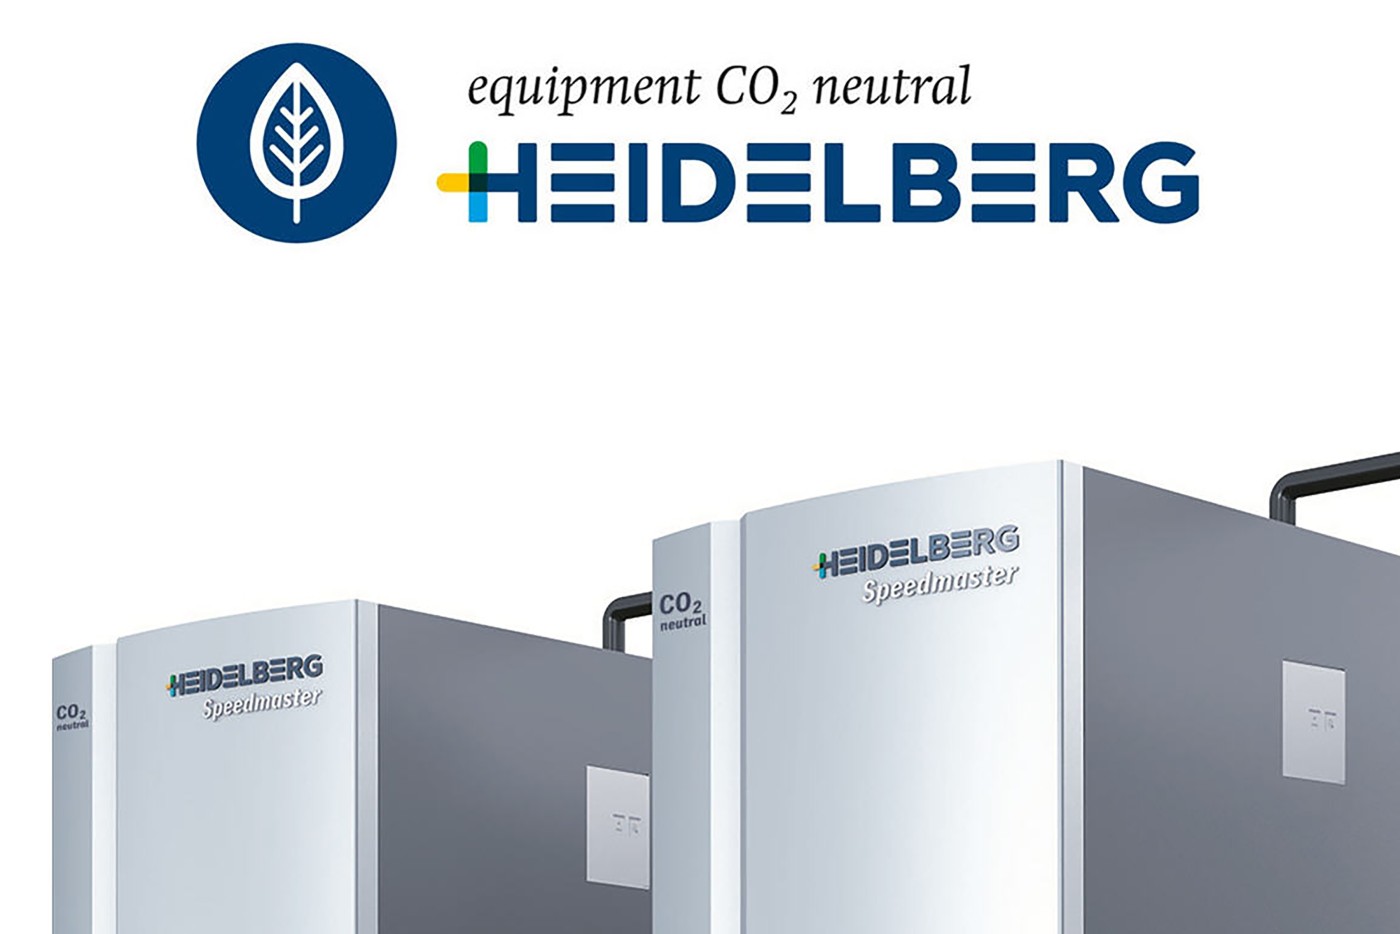 heidelberg-equipment-co2-neutral-logo-on-machine